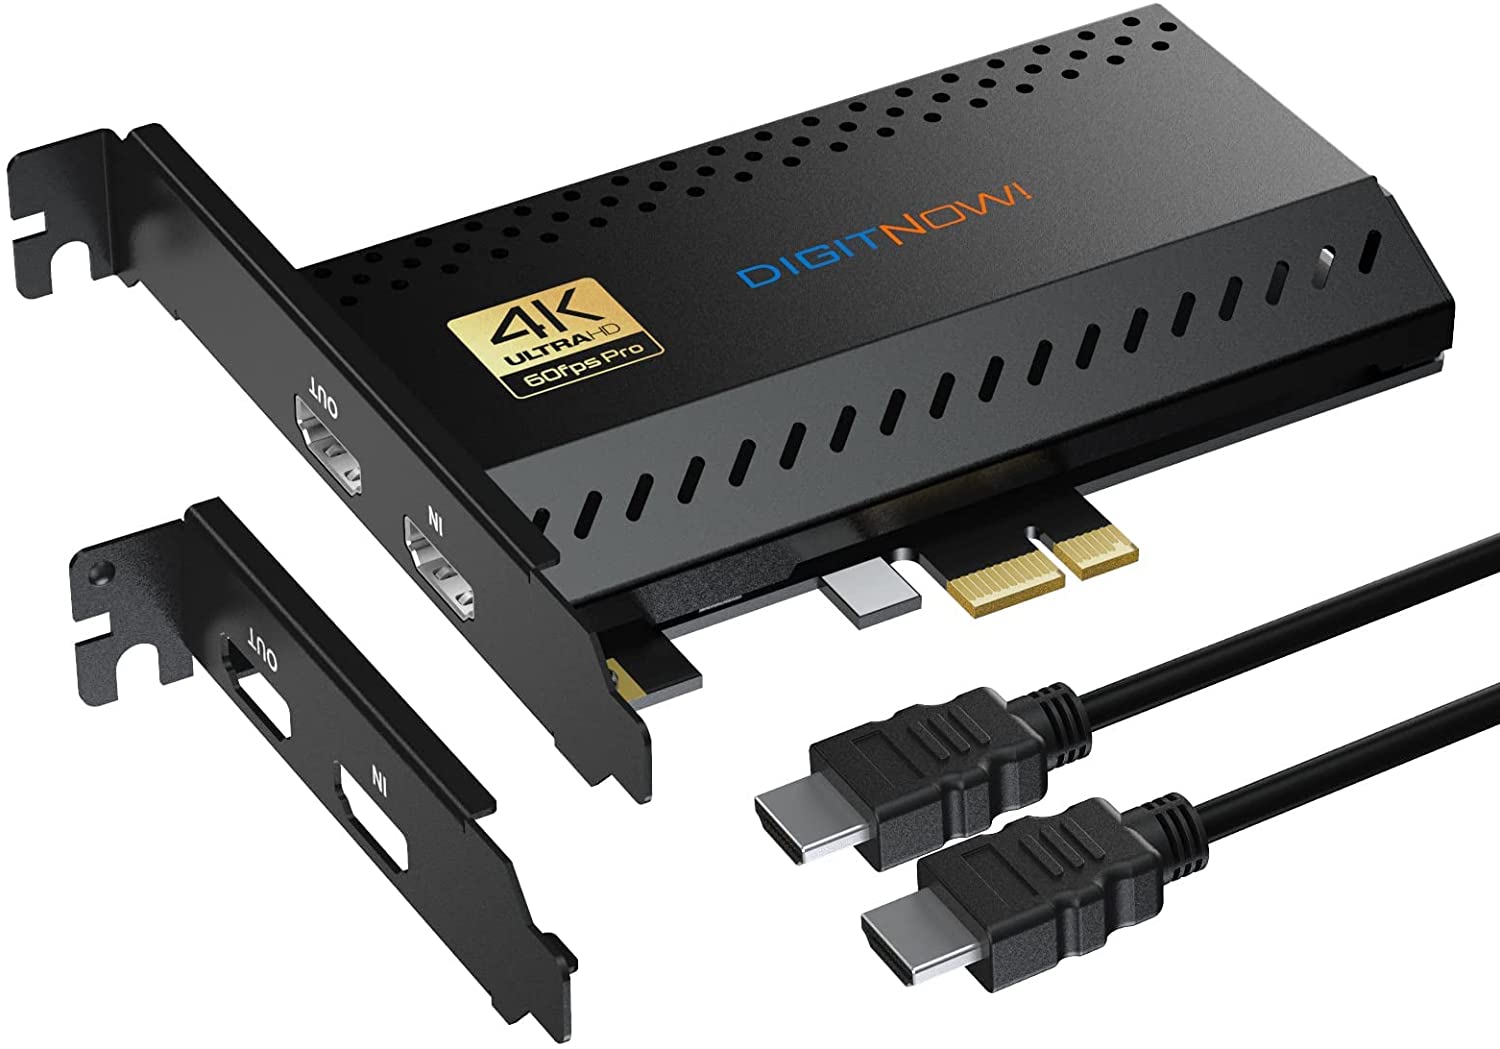 DIGITNOW 4K60 Pro PCIe Capture Card 4K60 Game Capture, Ultra-Low Laten